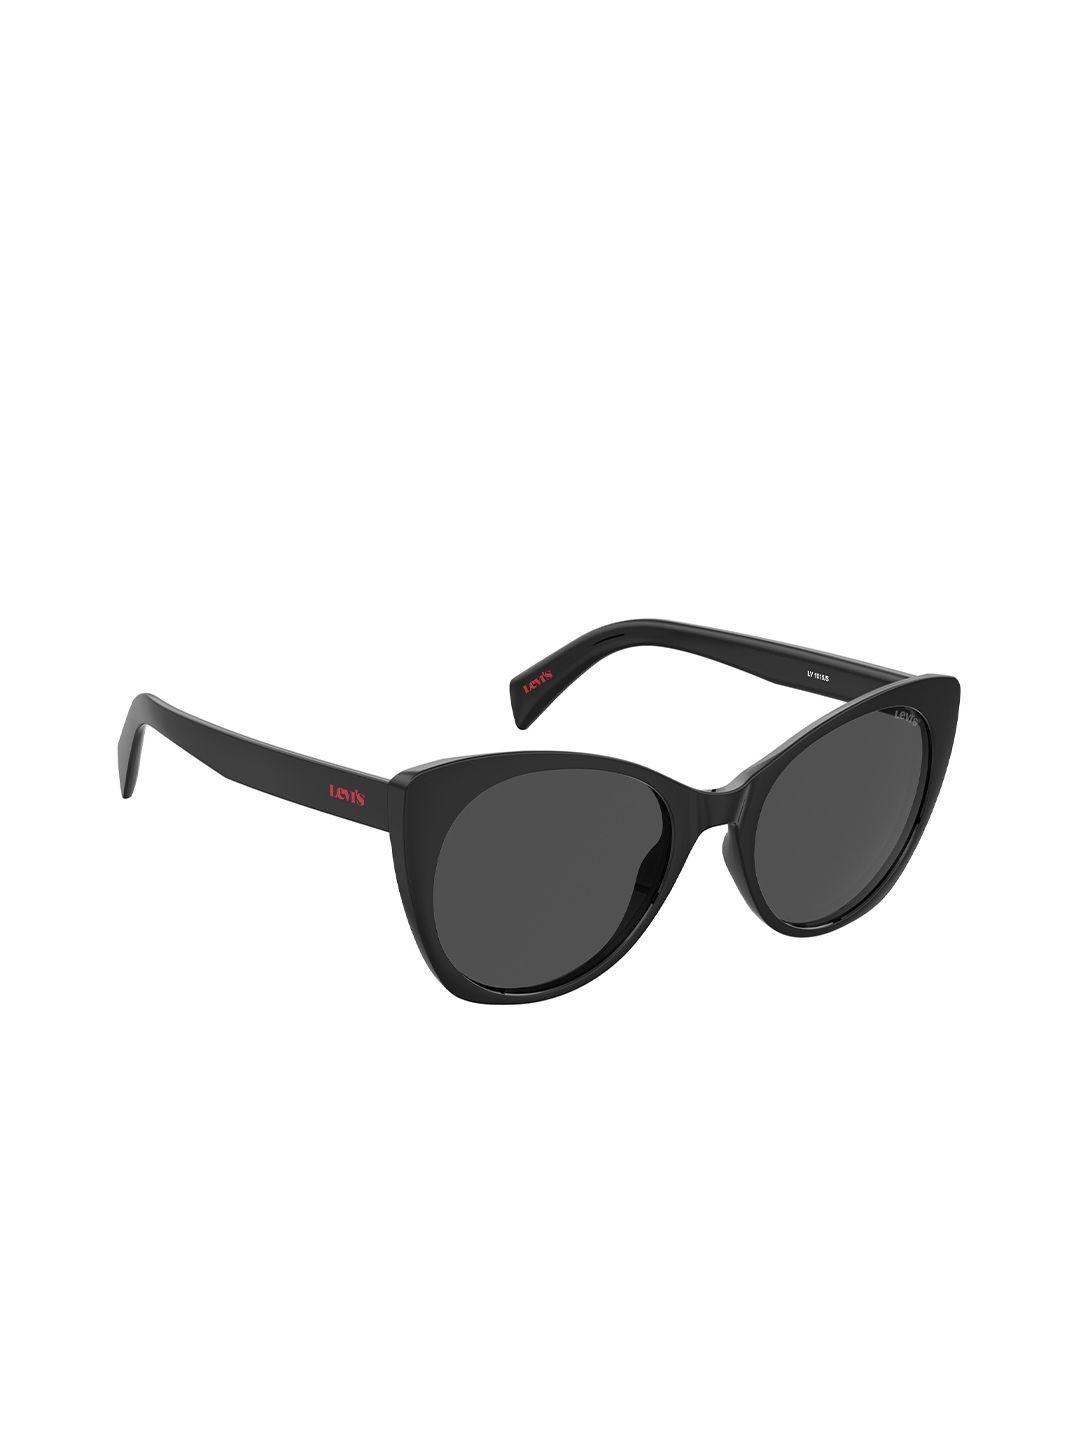 levis-women-cateye-sunglasses-with-polarised-lens